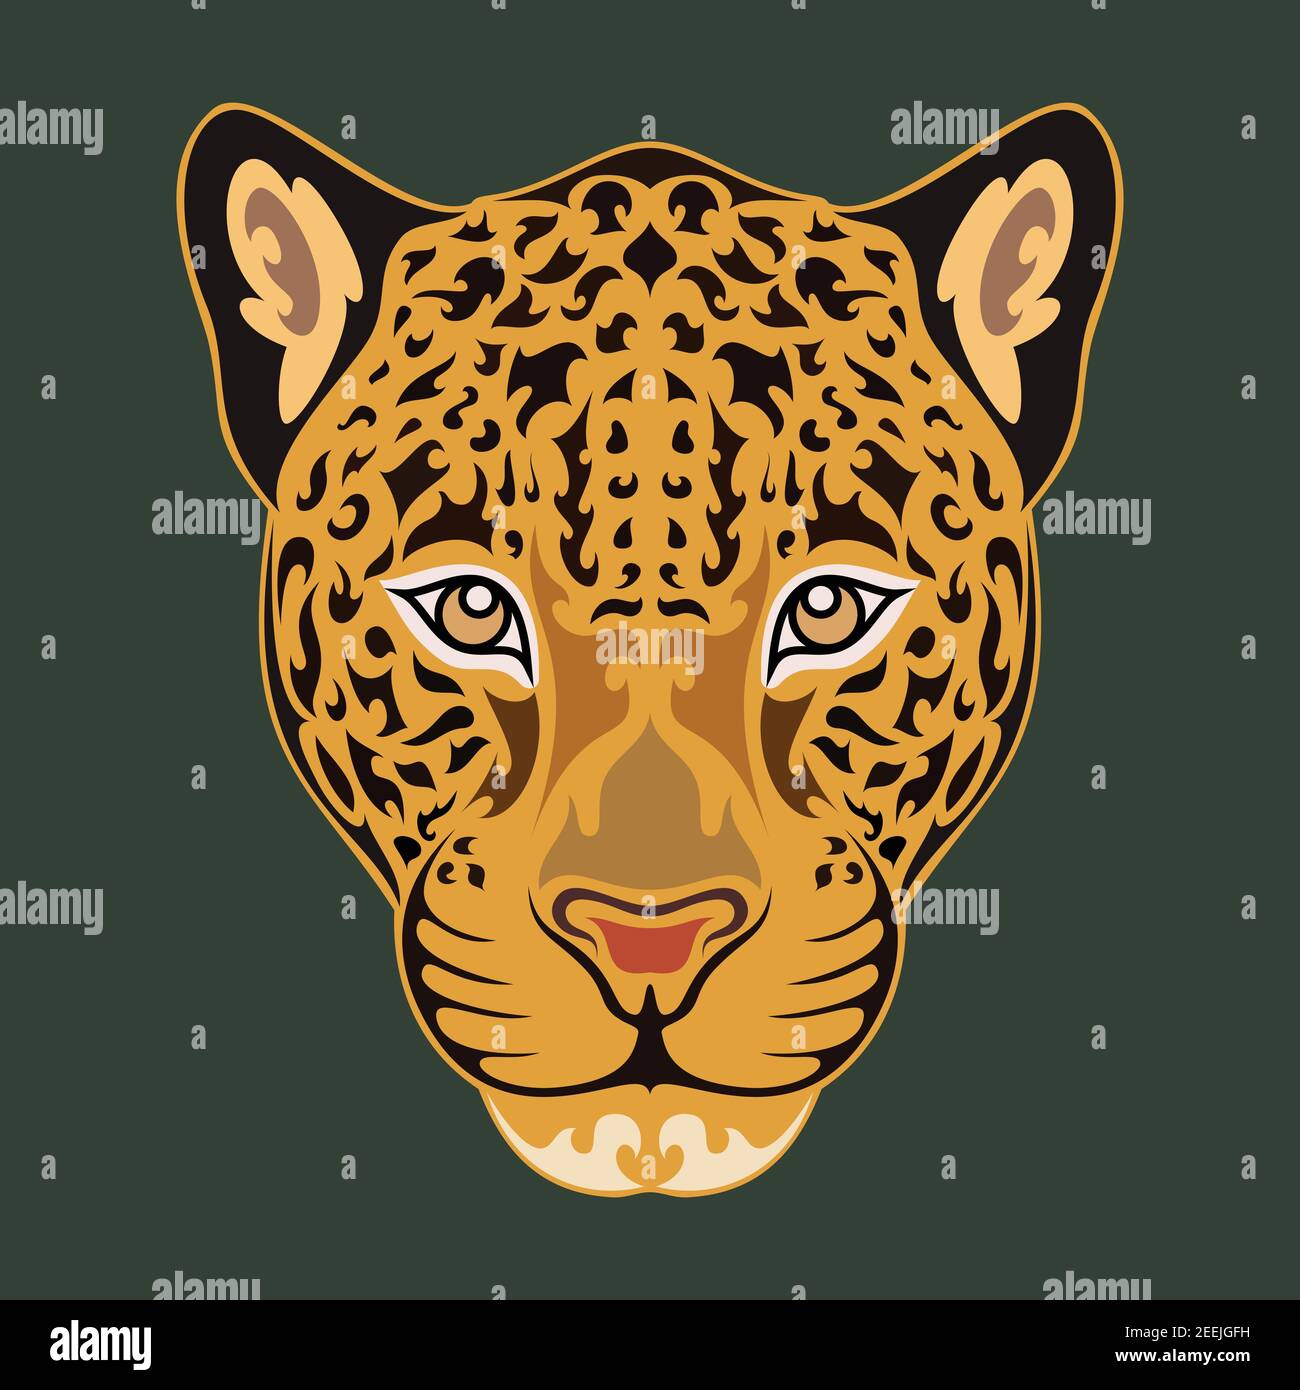 Leopard Cheetah Face Logo Design Inspiration Stock Vector Image & Art -  Alamy